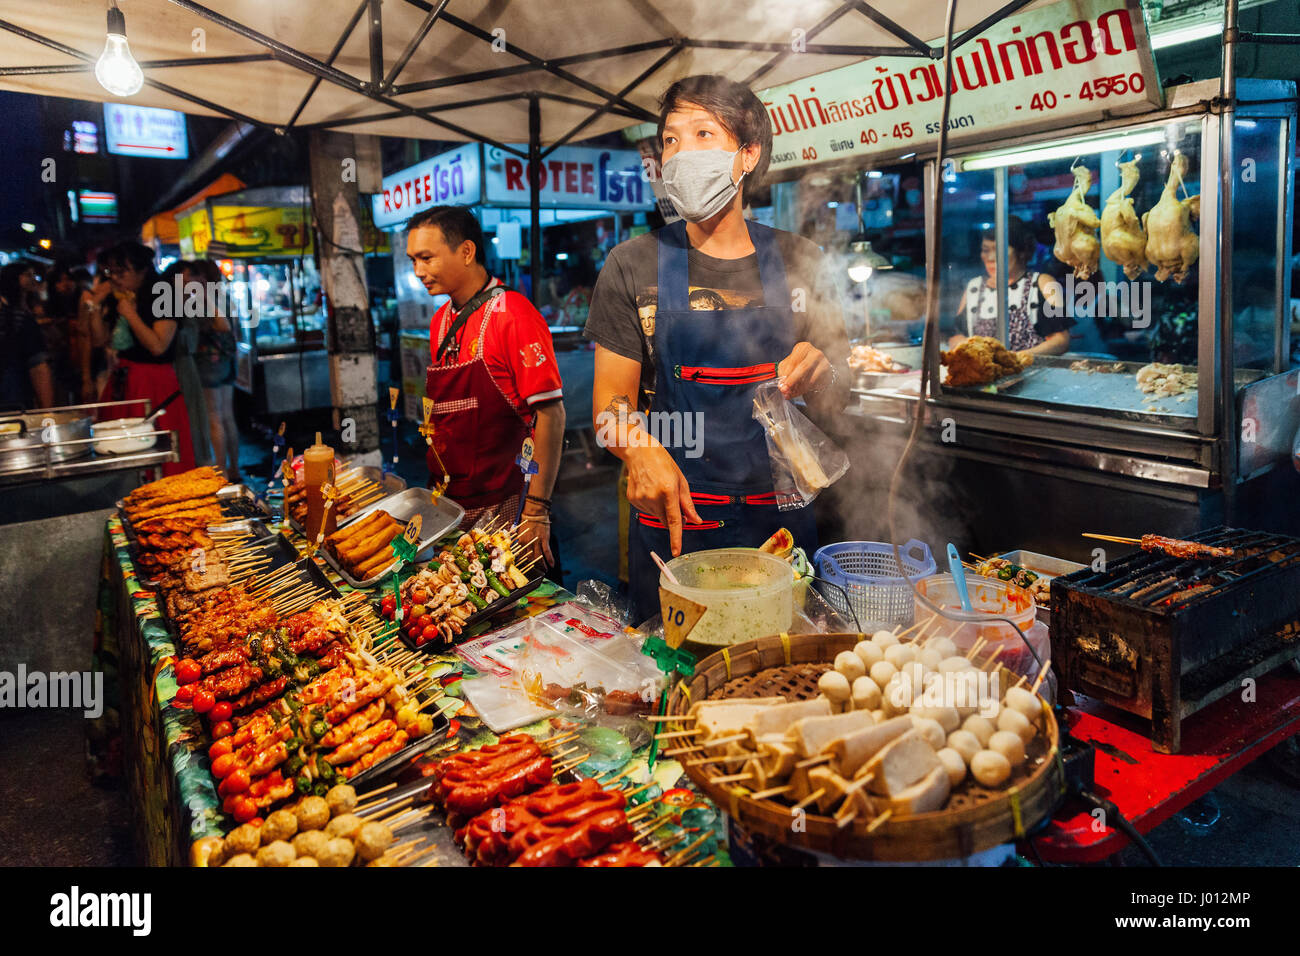 Chiang Mai, Thailand - 27. August 2016: Junge Männer verkaufen Satay am Samstag Nachtmarkt am 27. August 2016 in Chiang Mai, Thailand. Stockfoto